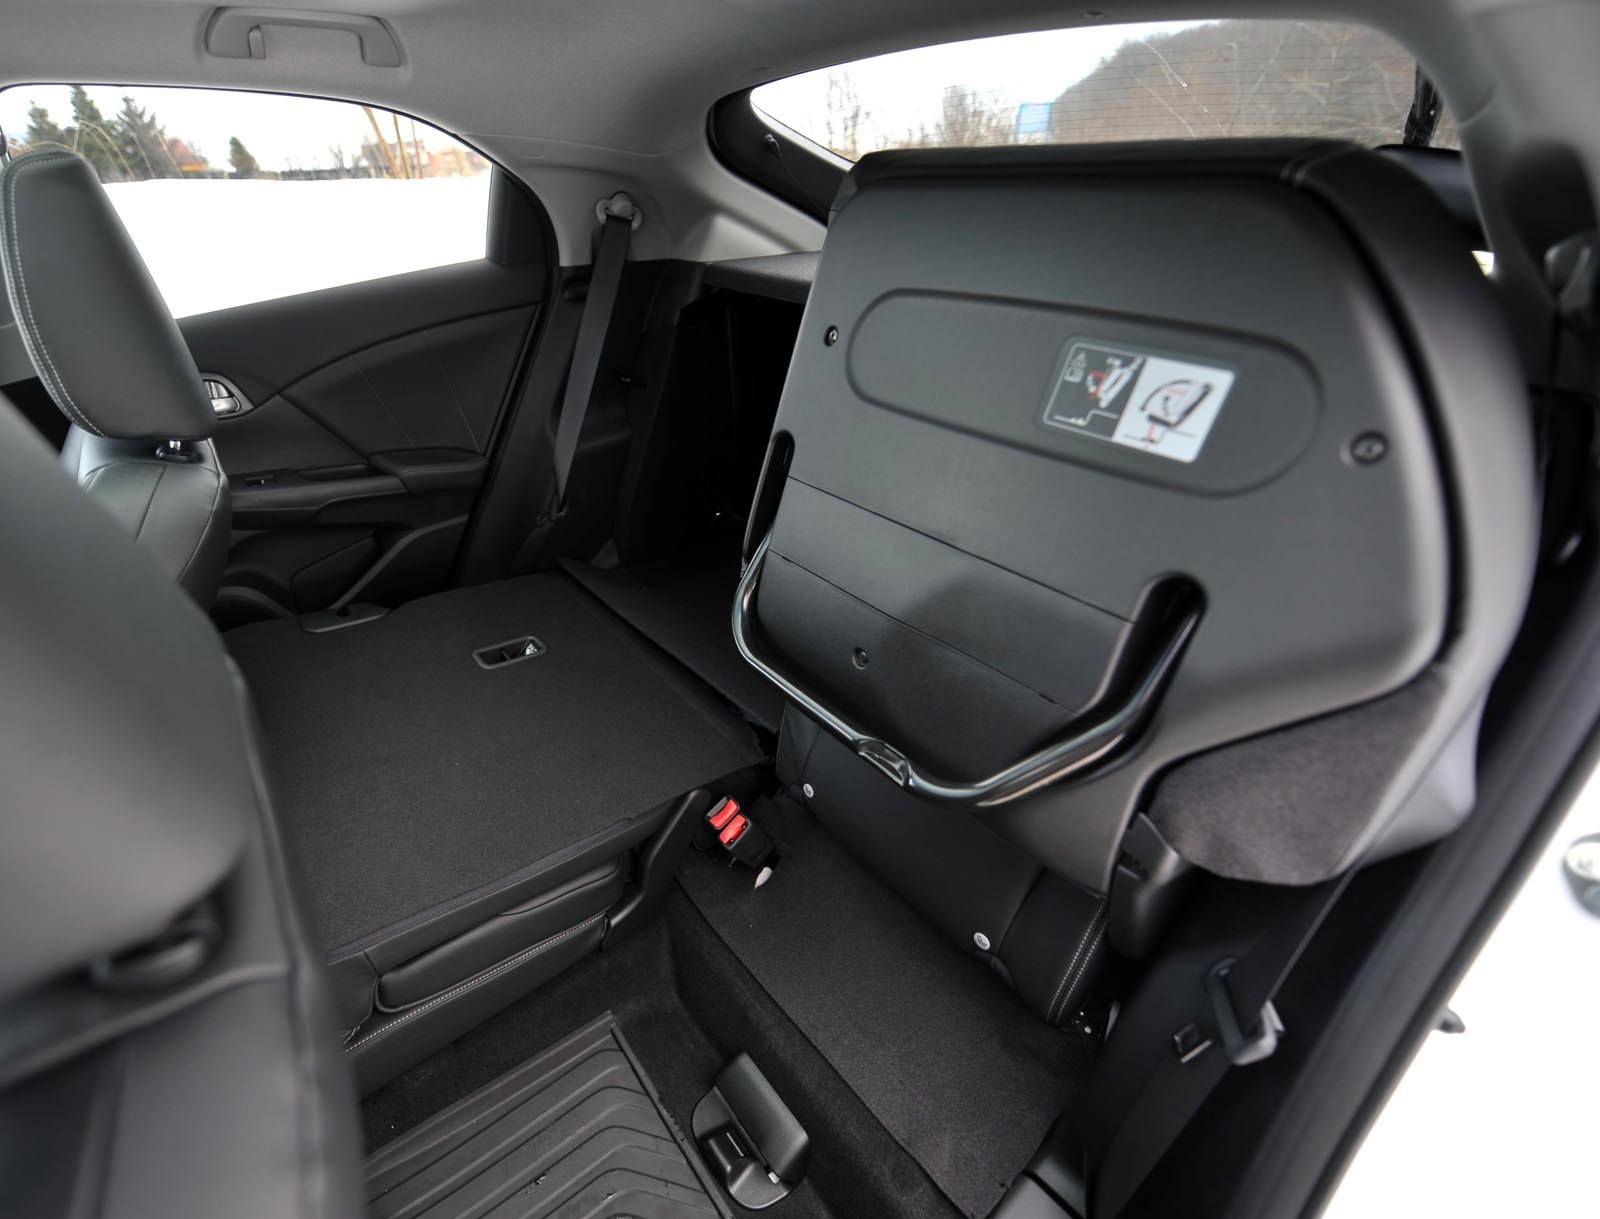 Honda Civic ramane un etalon in clasa compacta ca habitabilitate si modularitate